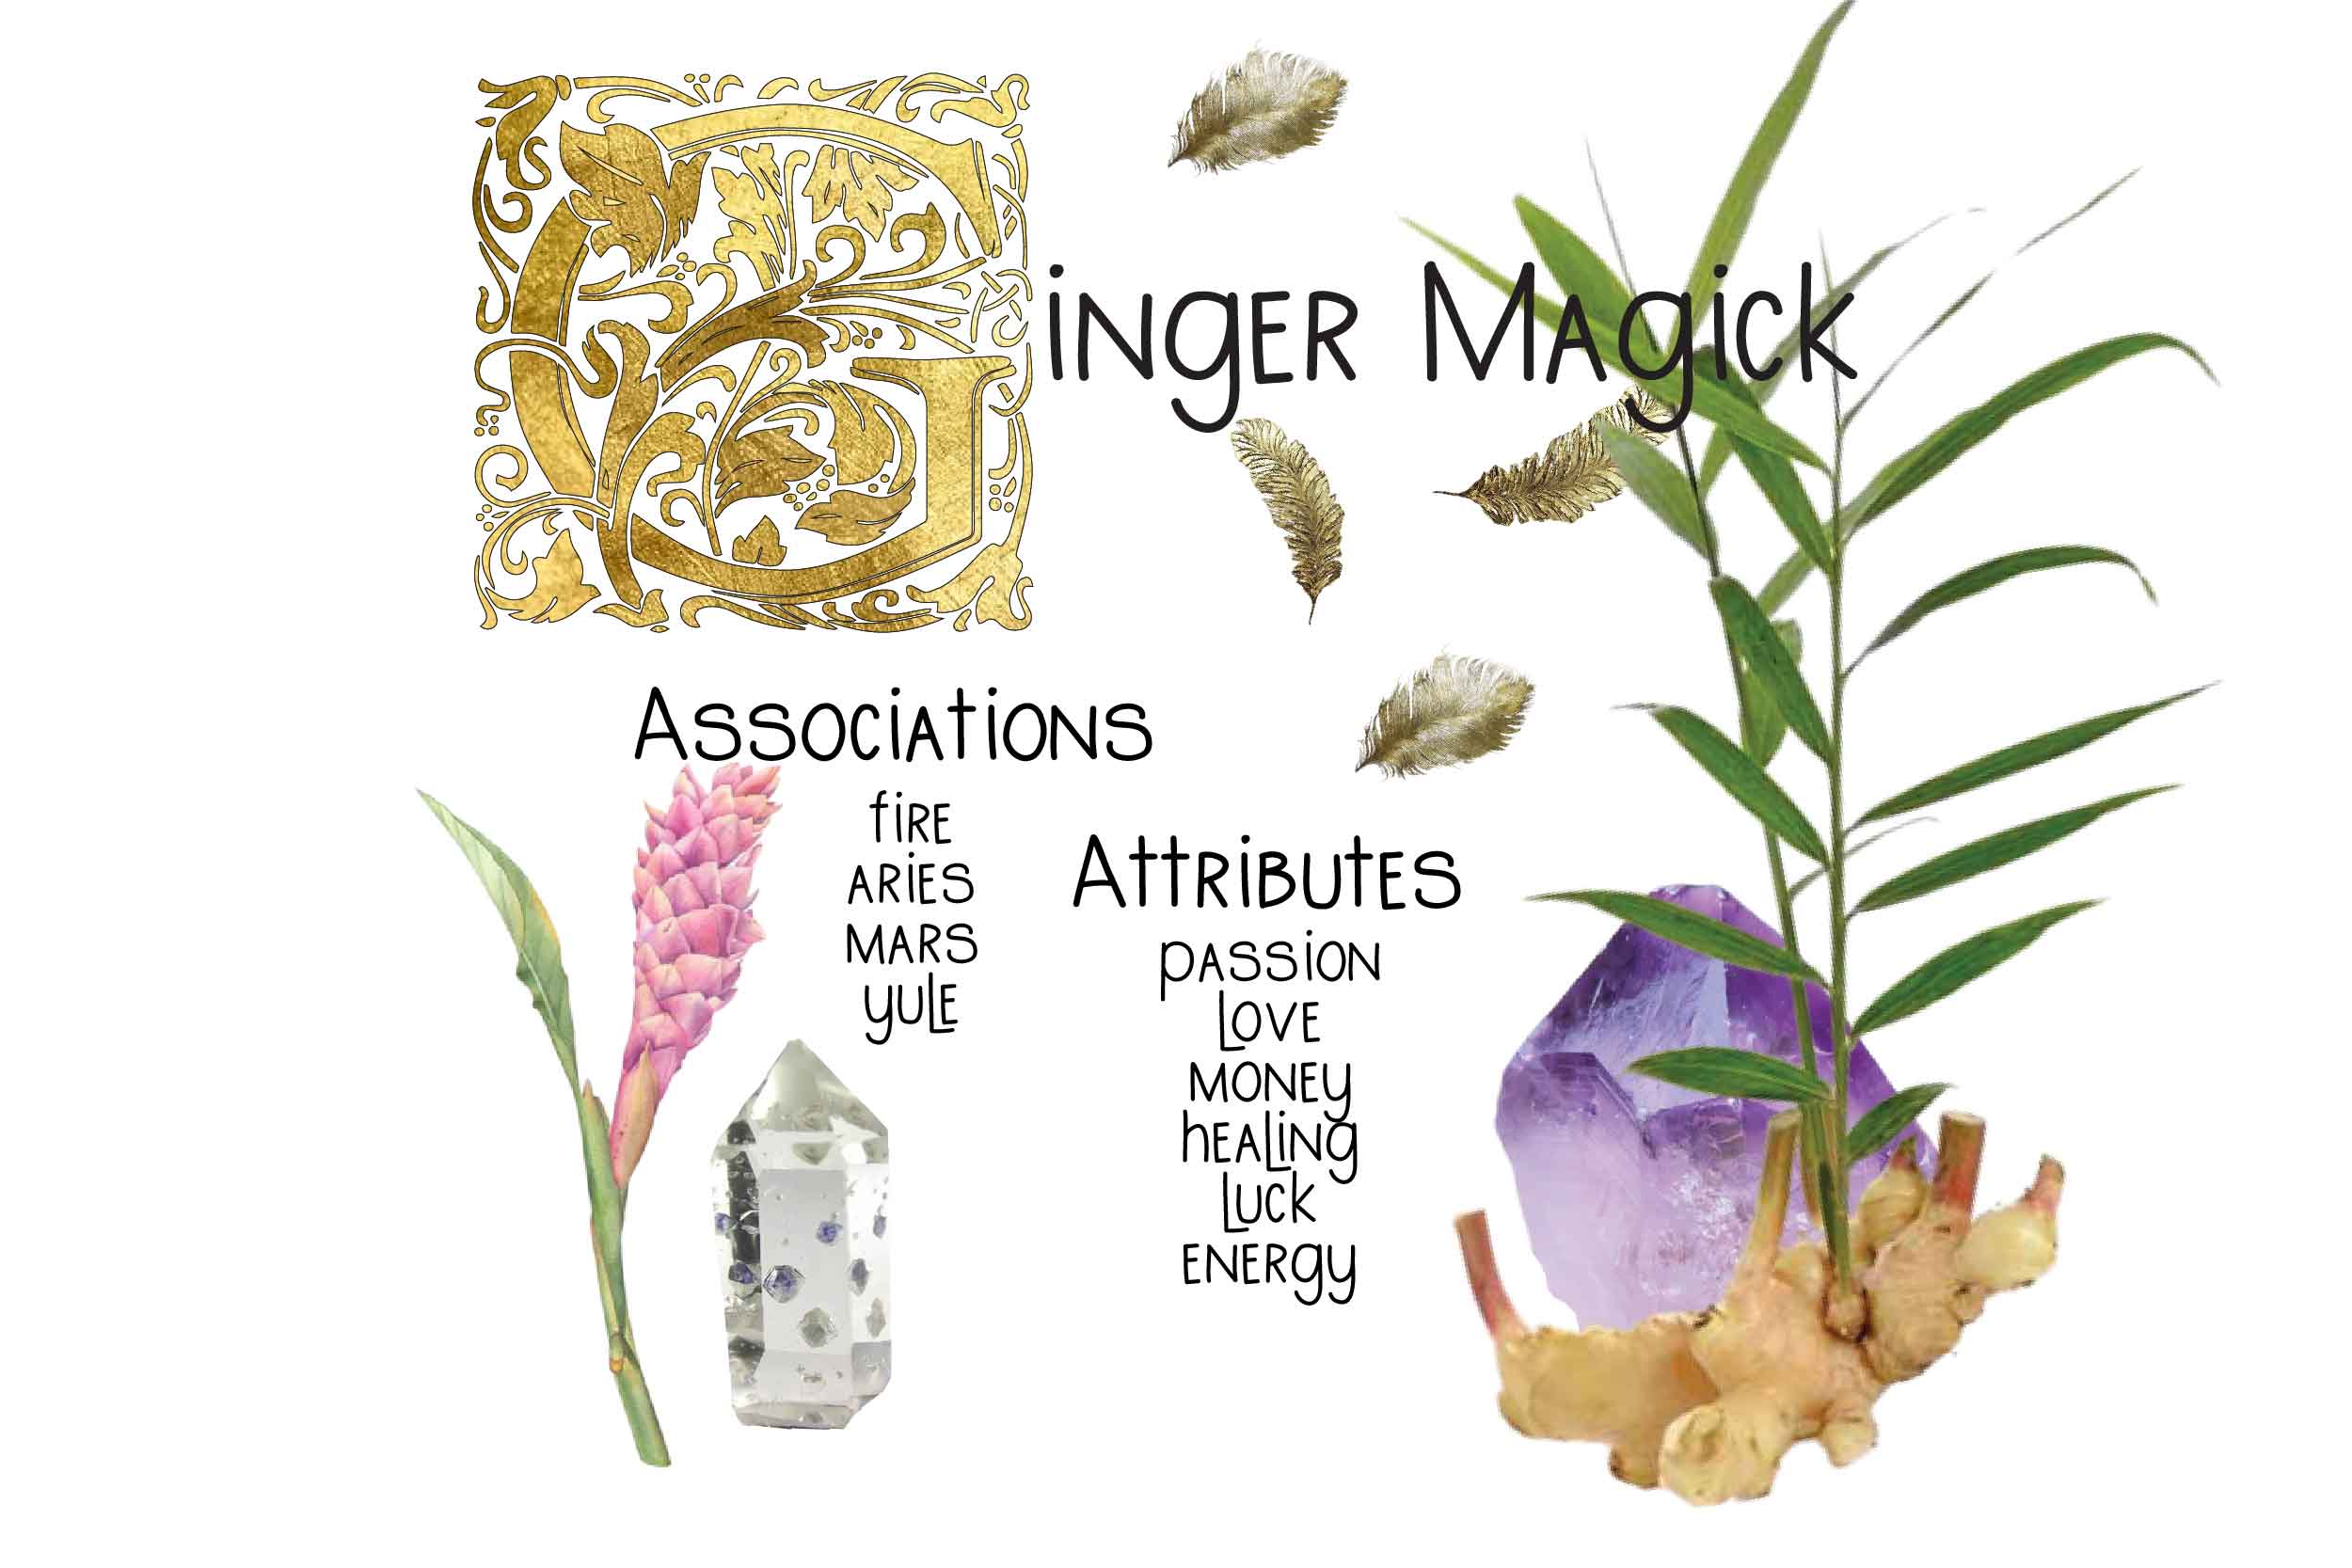 Ginger magickal properties